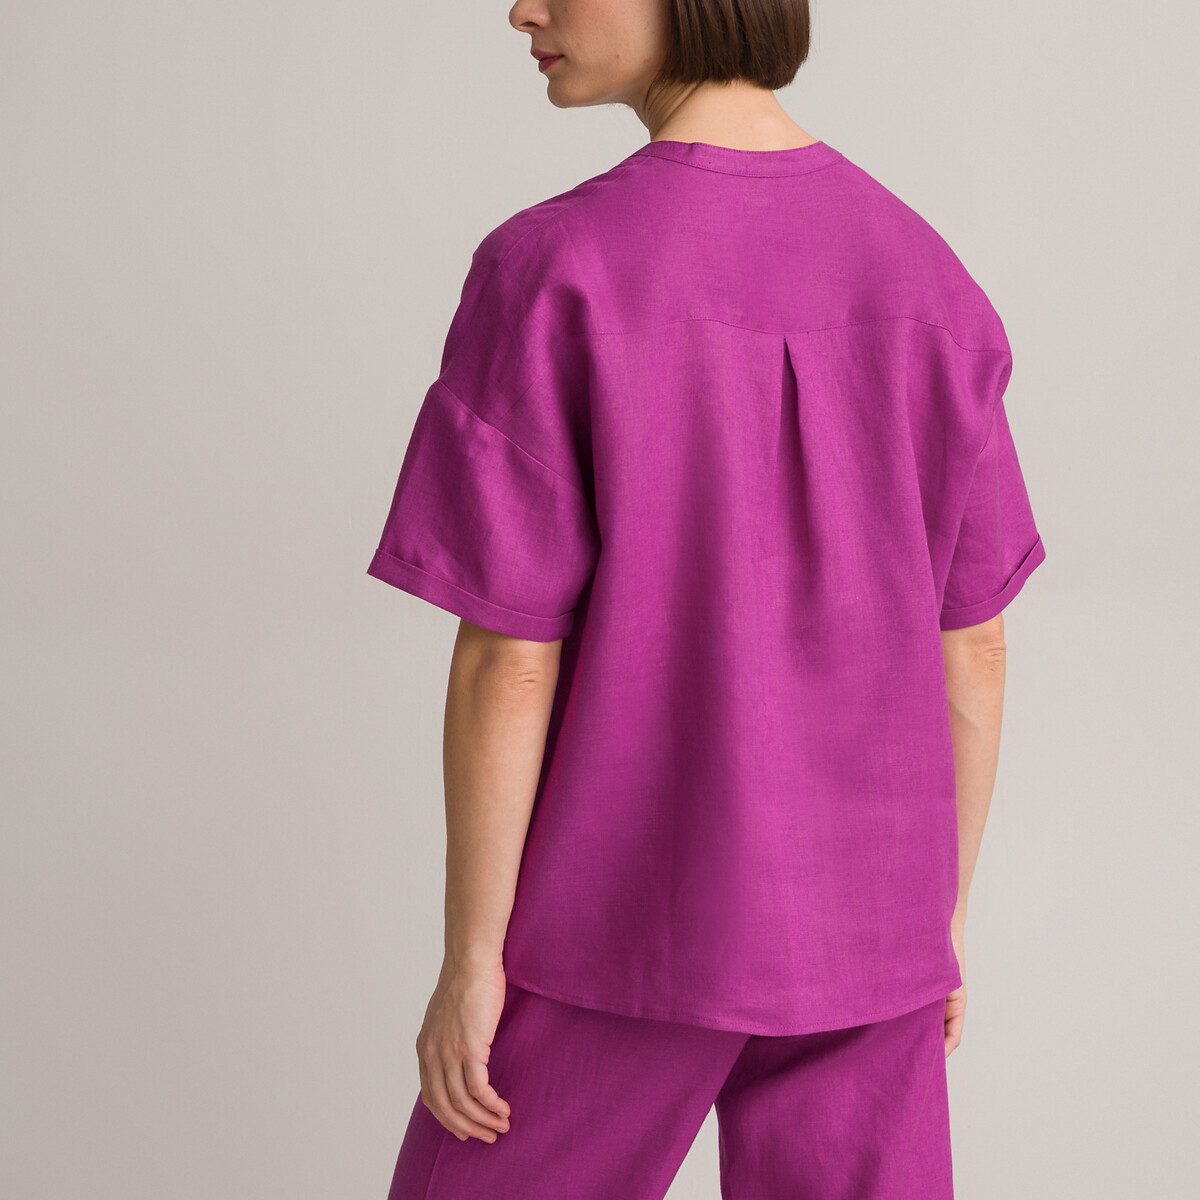 Рубашка С короткими рукавами 100 лен 50 (FR) - 56 (RUS) фиолетовый LaRedoute, размер 50 (FR) - 56 (RUS) Рубашка С короткими рукавами 100 лен 50 (FR) - 56 (RUS) фиолетовый - фото 4